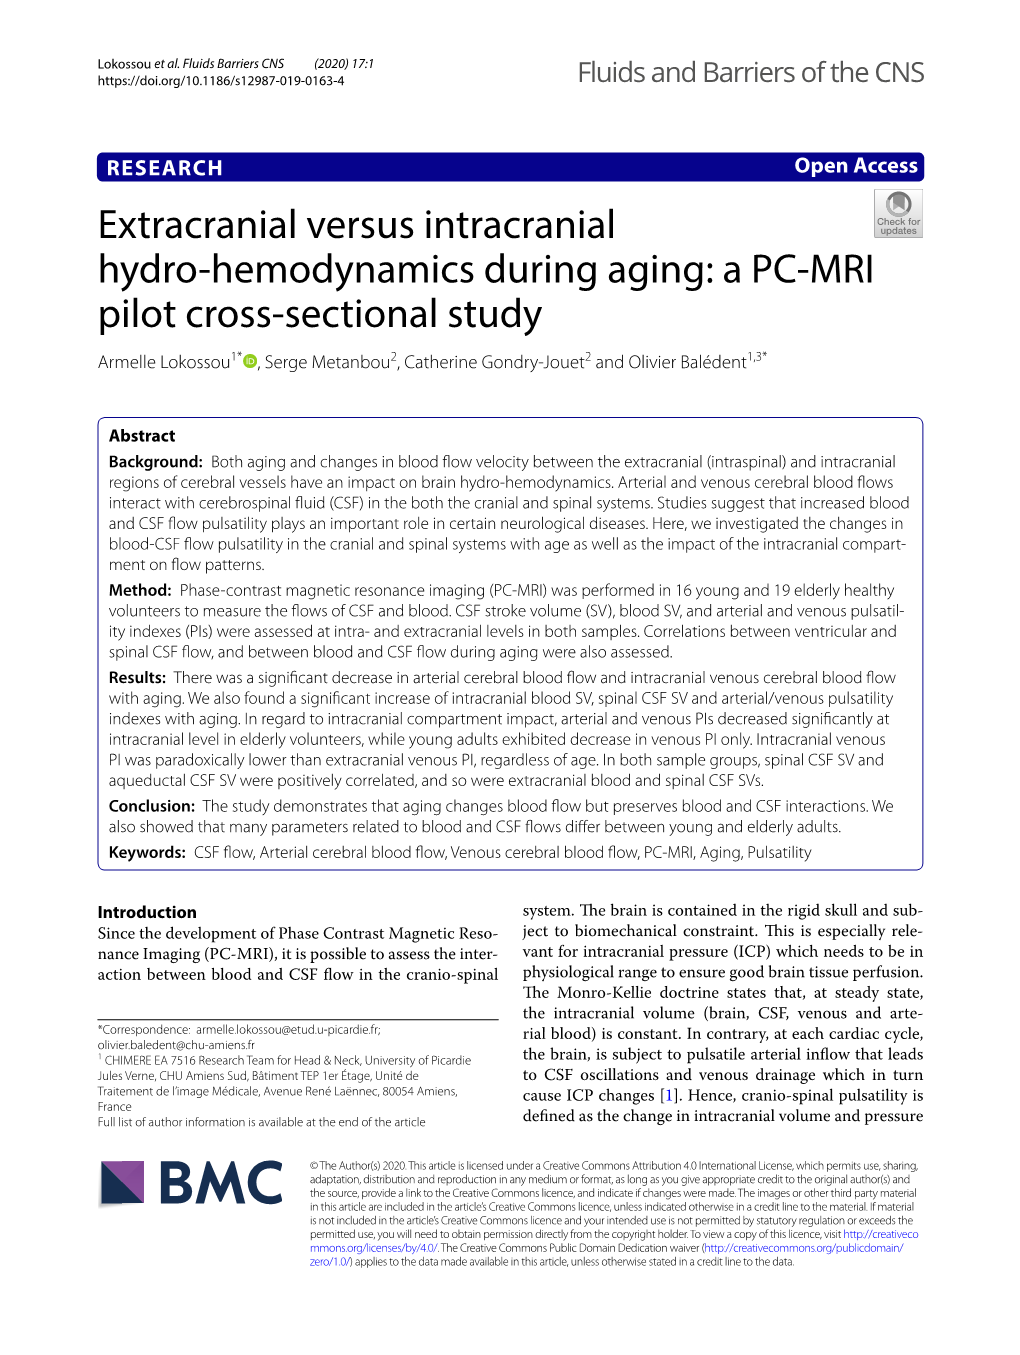 Extracranial Versus Intracranial Hydro-Hemodynamics During Aging: a PC-MRI Pilot Cross-Sectional Study